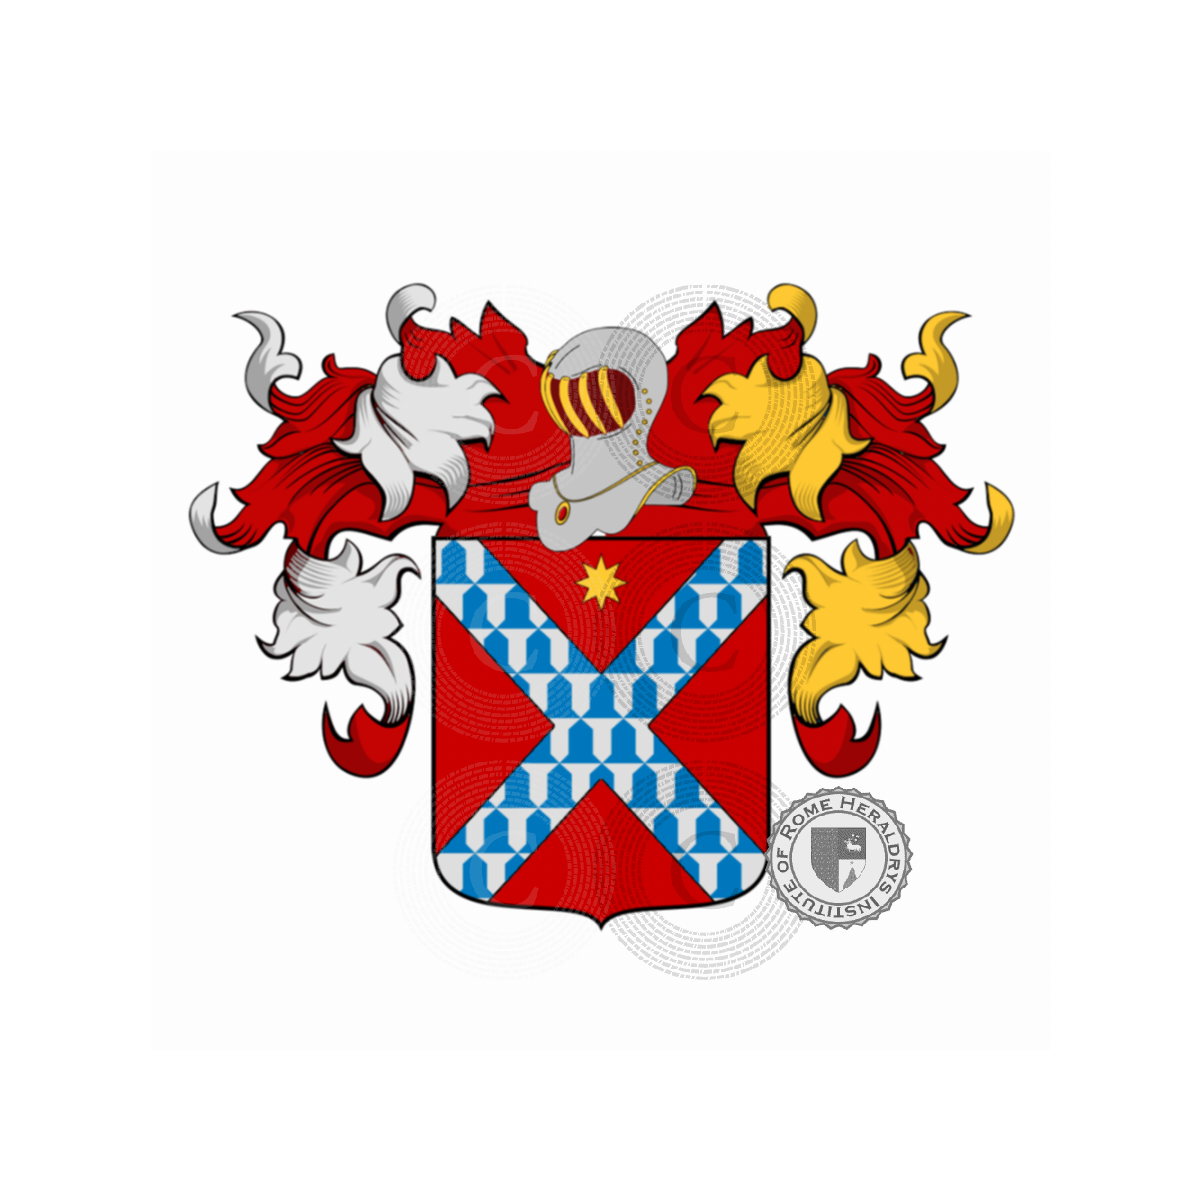 Coat of arms of familyLazzari, de Lazzari